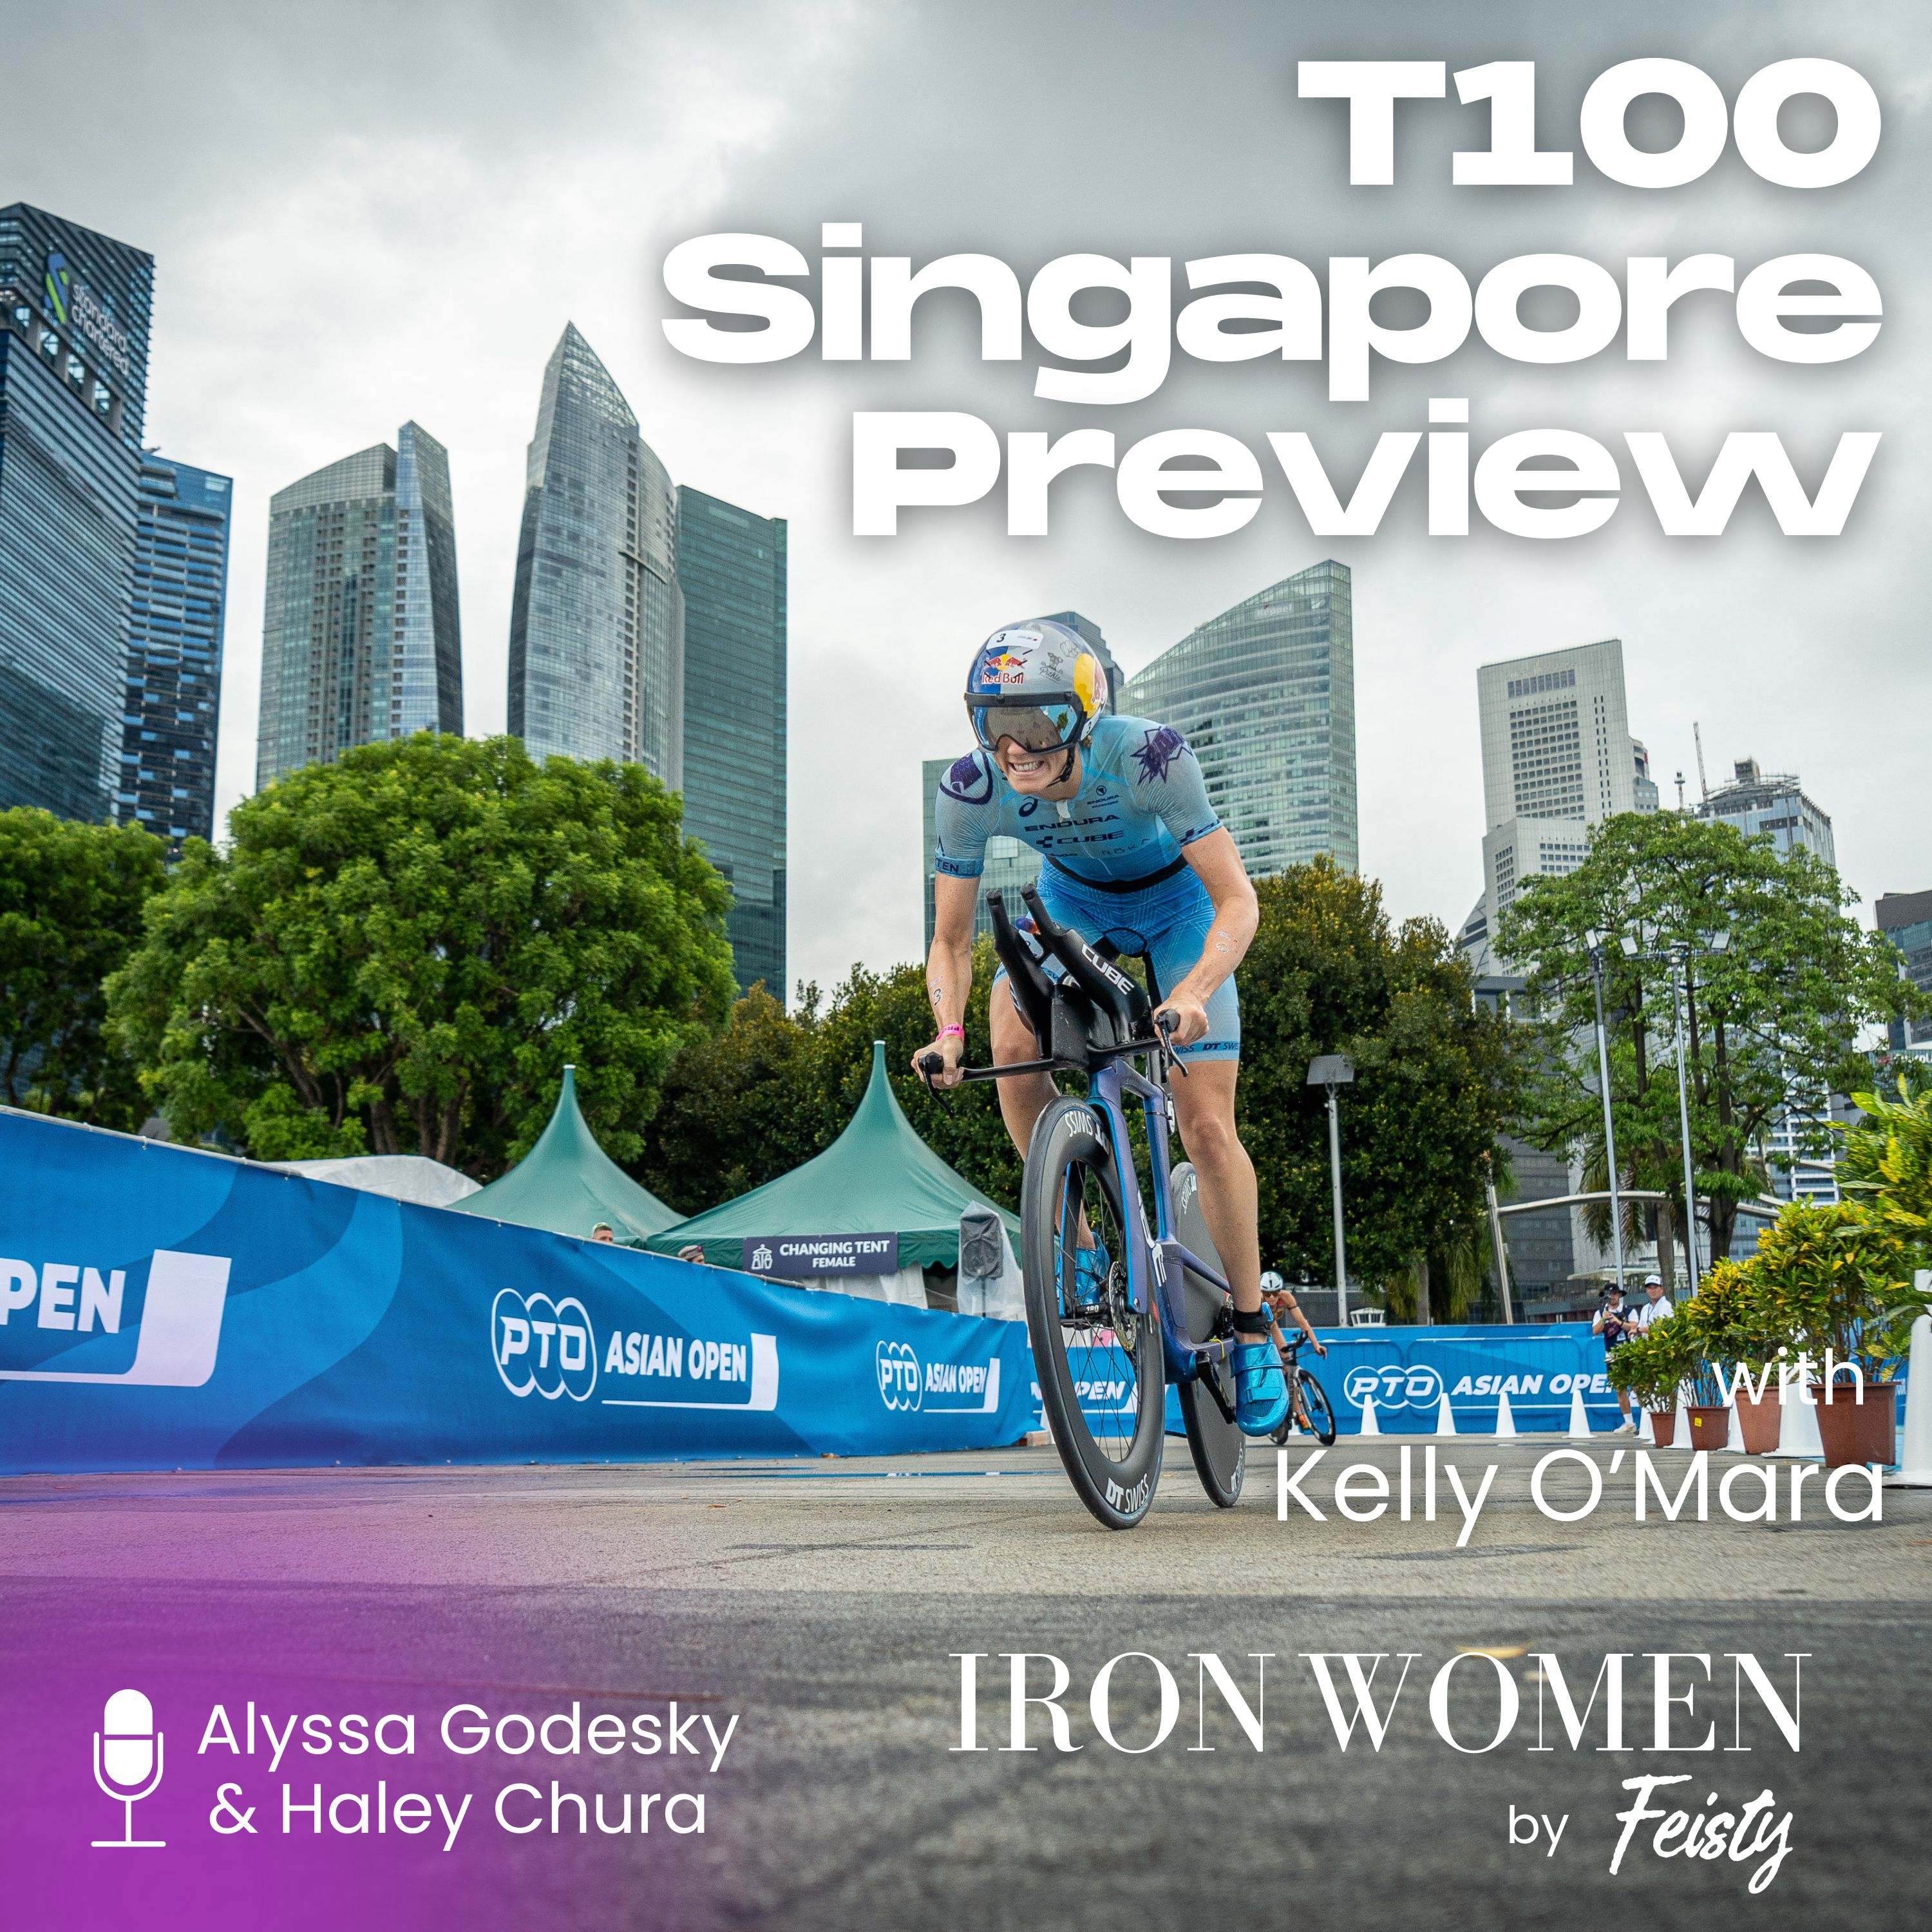 IronWomen - T100 Singapore Preview with Kelly O'Mara